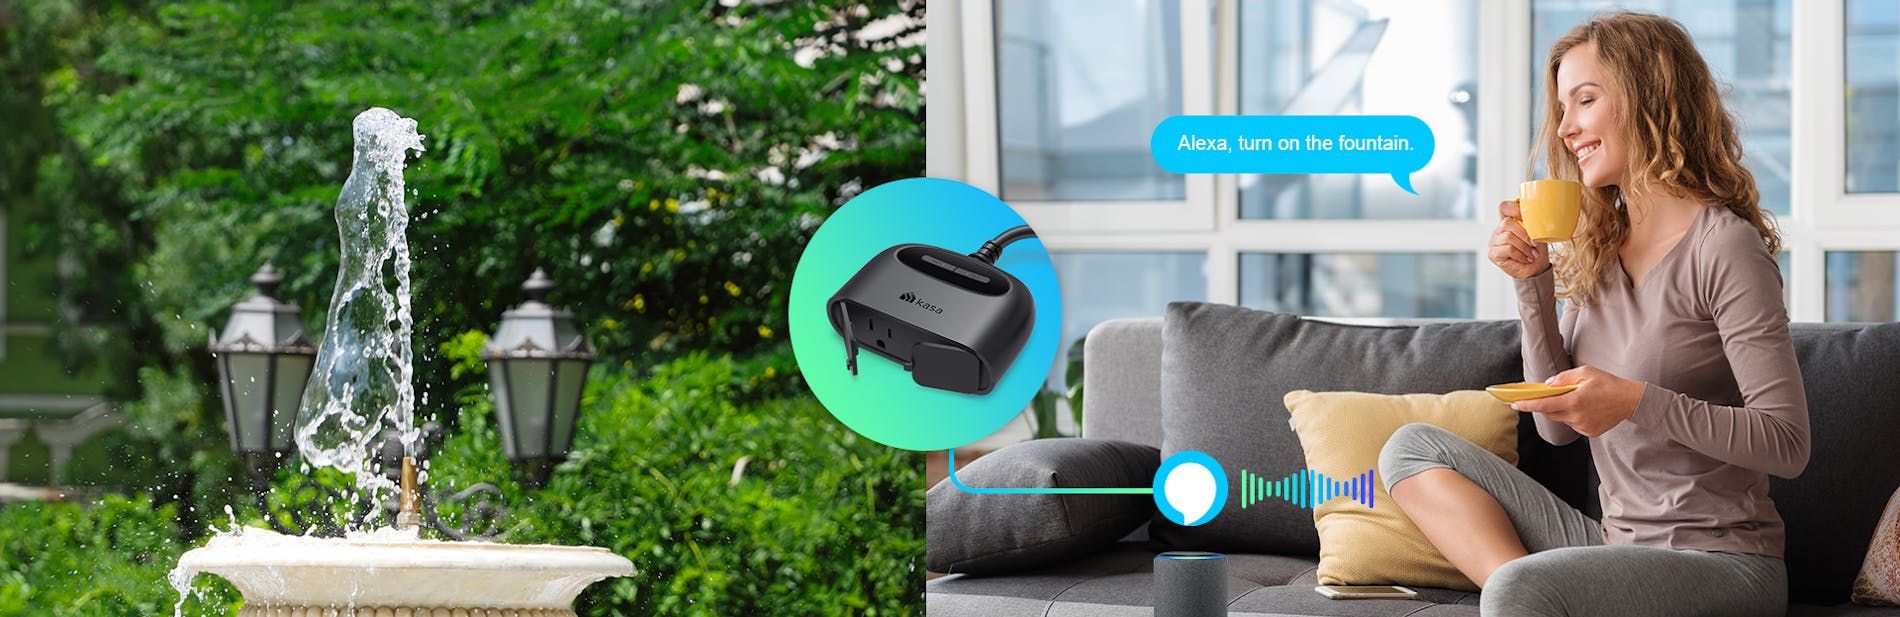 Wi-Fi Kasa Outdoor Smart Plug - Super-Feed Enterprise